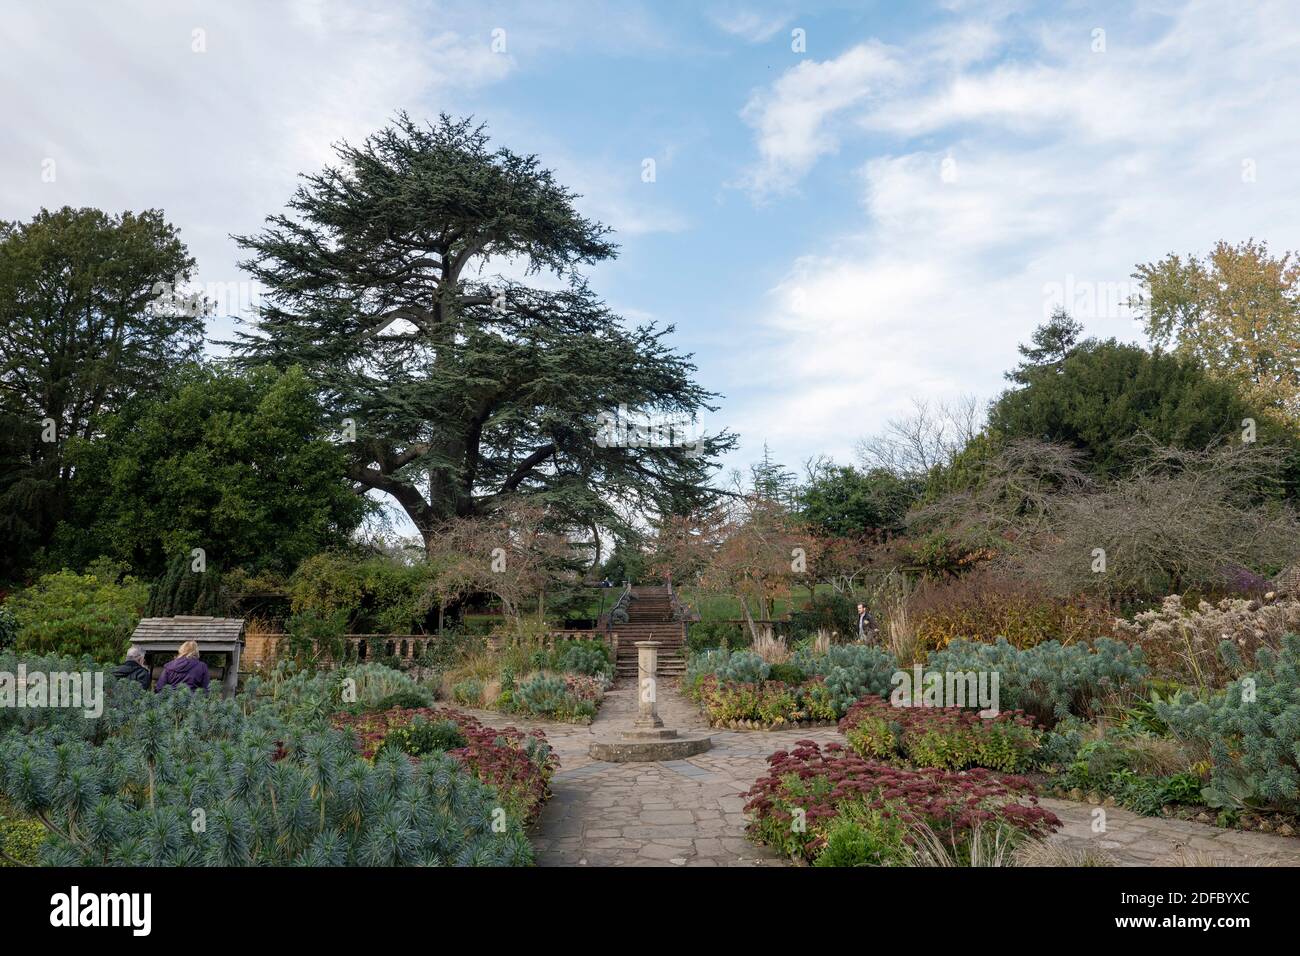 The Old English Garden in the Rookery at Streatham Common le 9 novembre 2020 à Londres au Royaume-Uni. Photo de Sam Mellish Banque D'Images